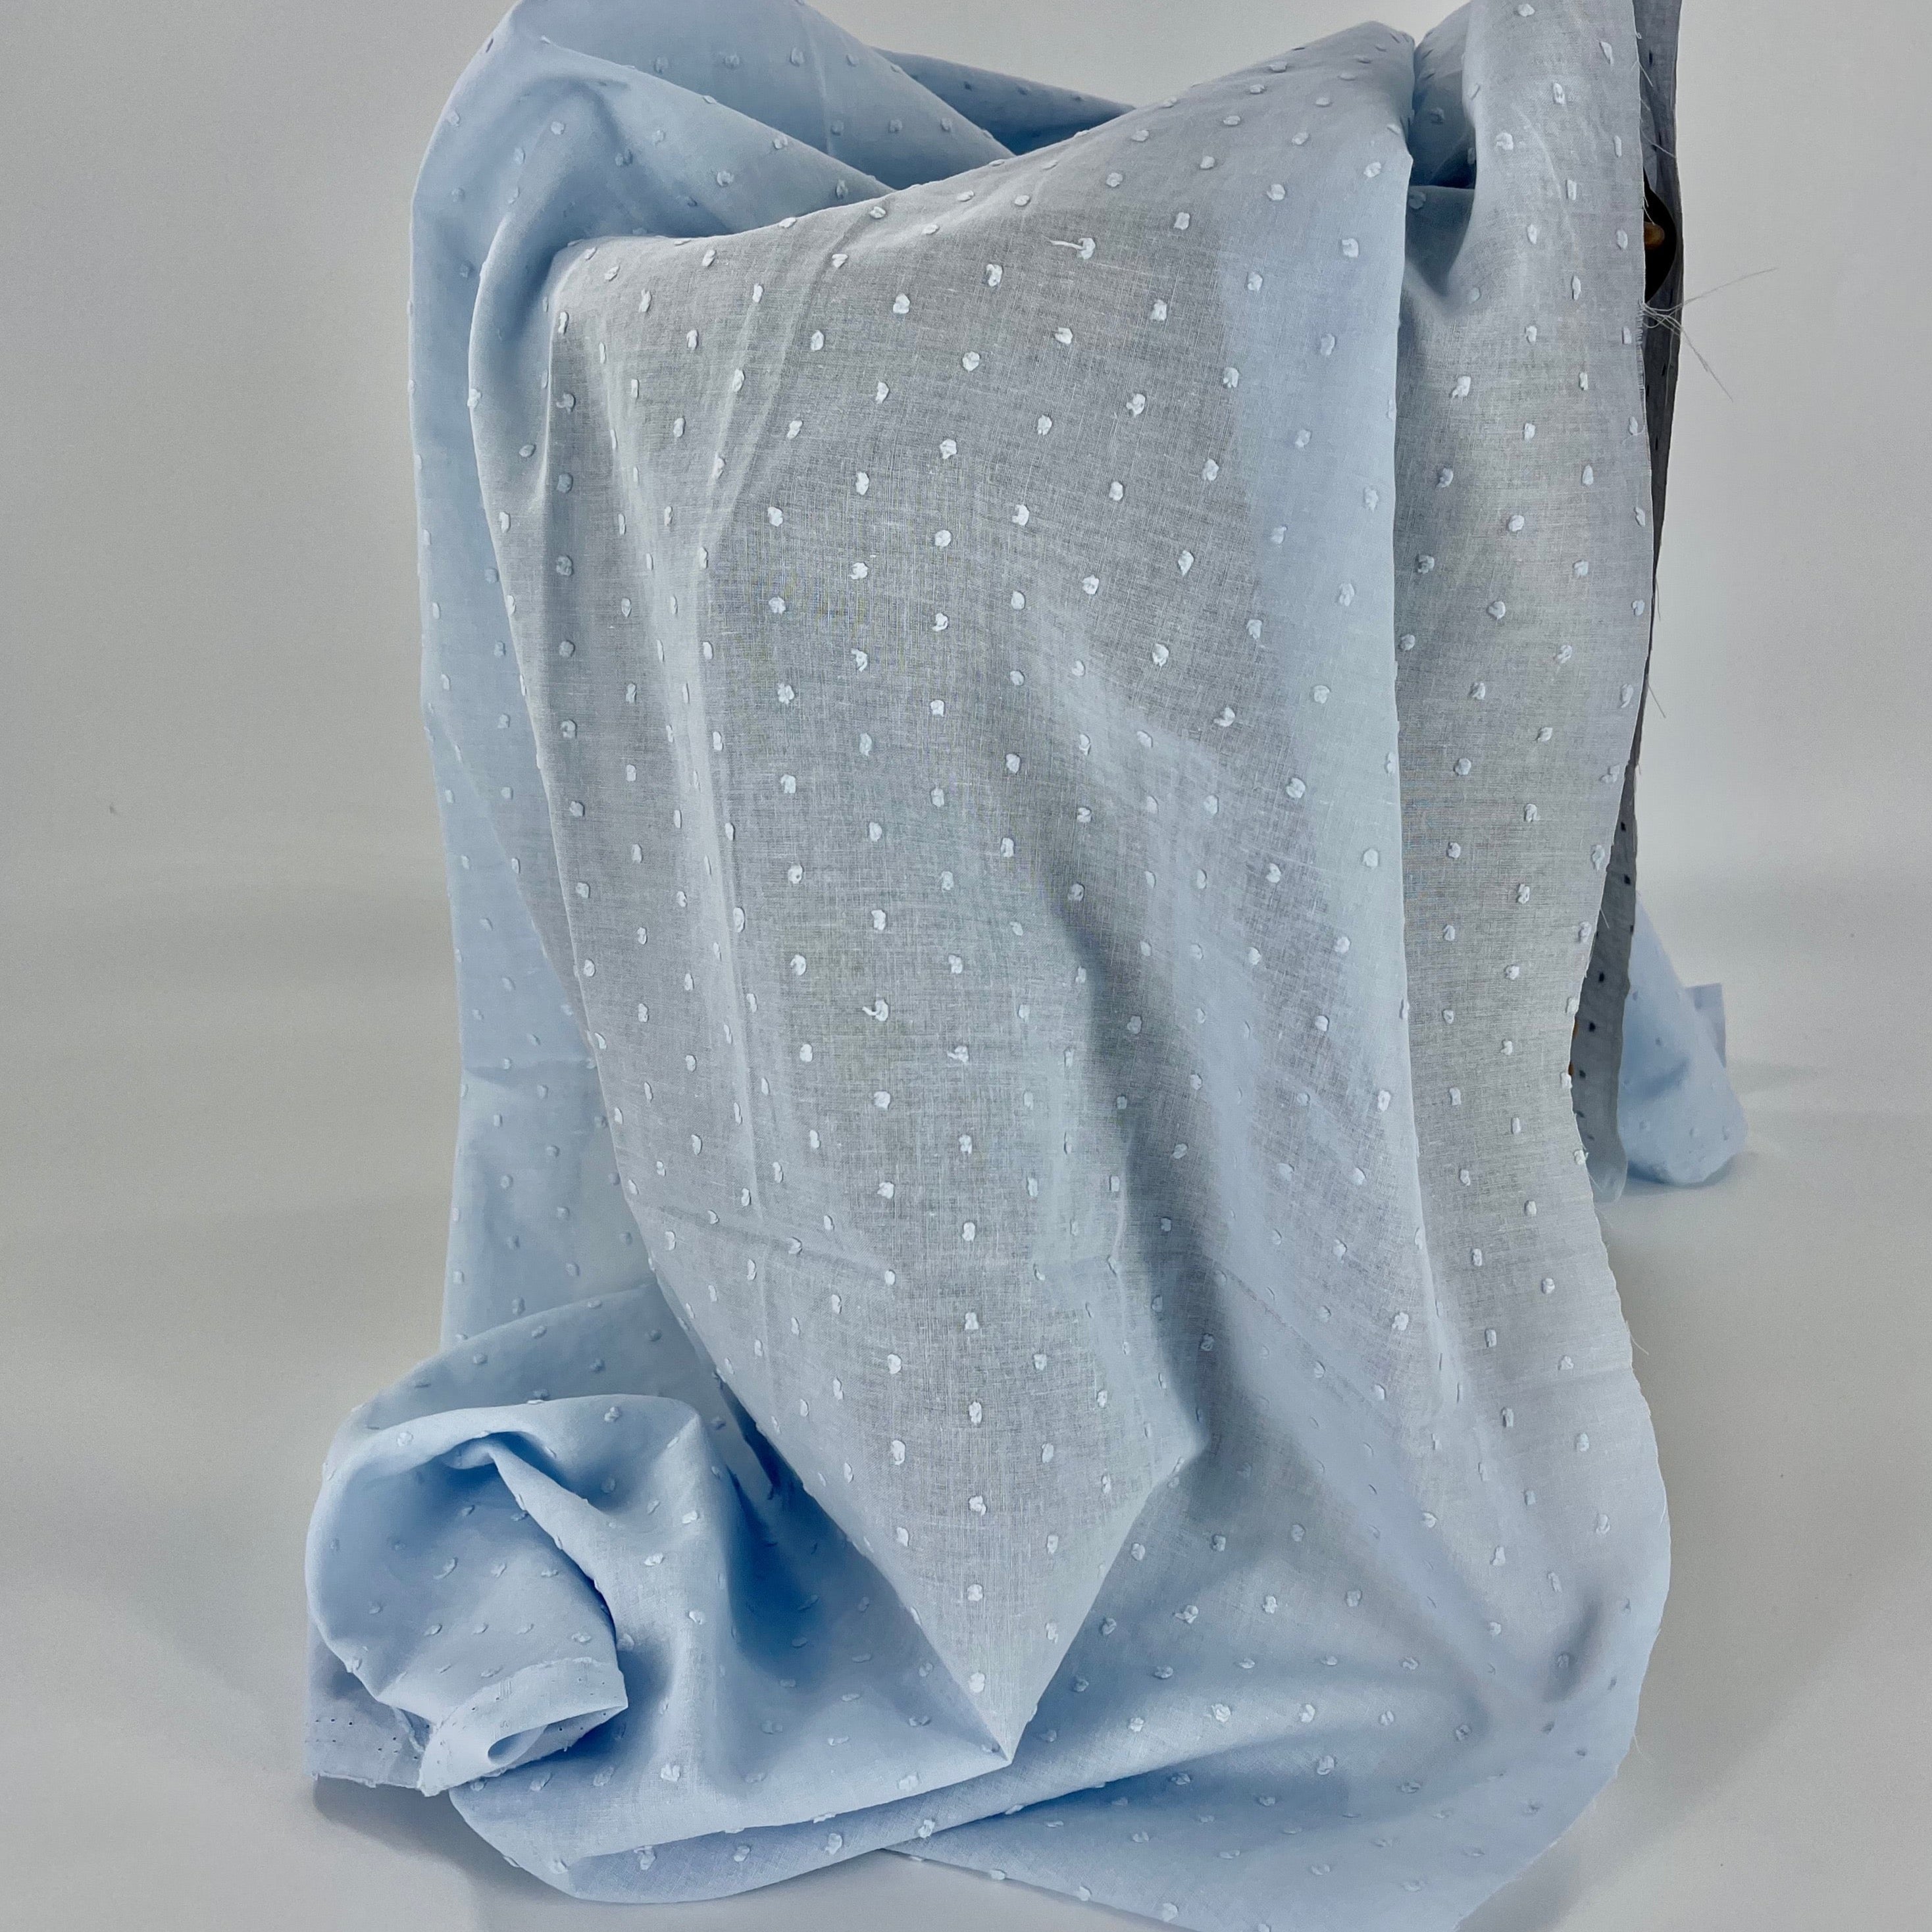 Tetra 100s Light Blue Dobby Fabric by MILK Shirts